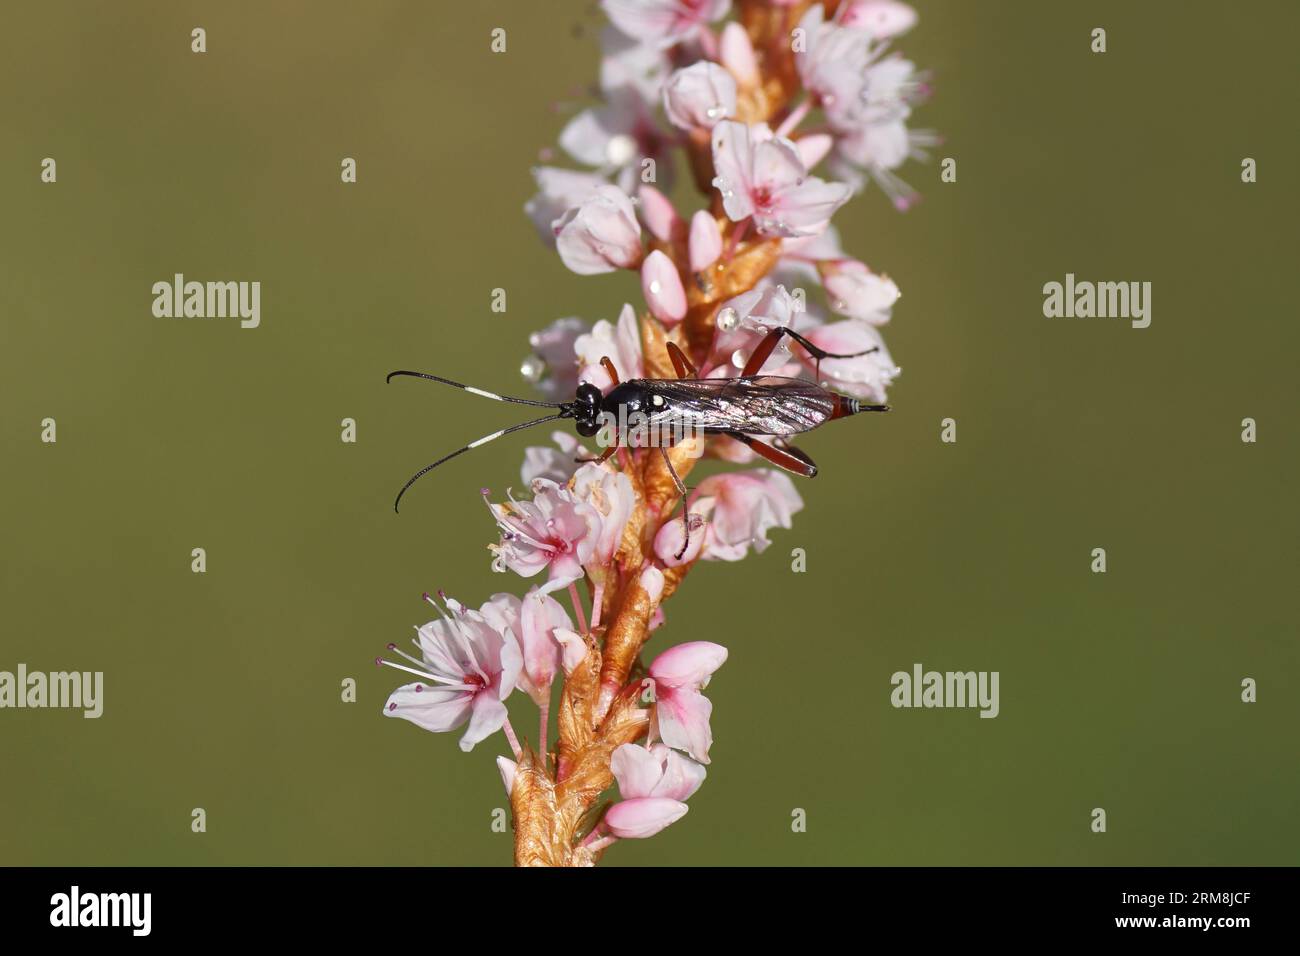 Female Ichneumon wasp Exetastes adpressorius, family Ichneumonidae. On pink flowers of Himalayan bistort (Bistorta affinis), family Polygonaceae. Stock Photo